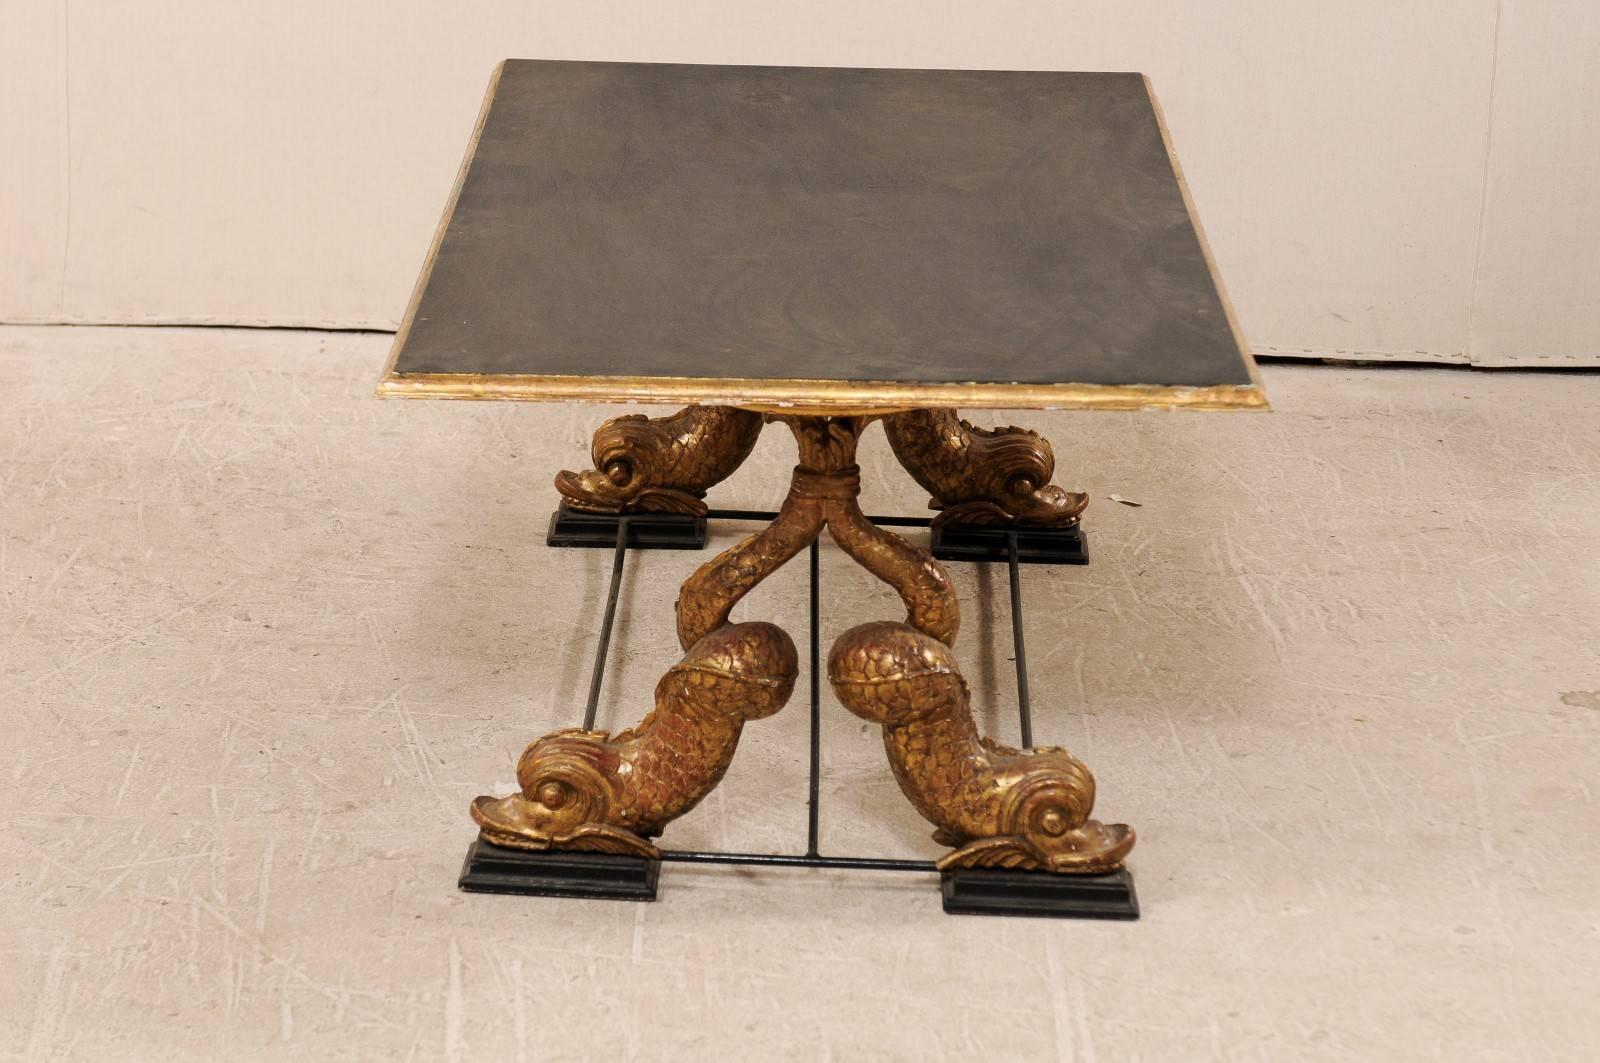 Metal Italian Mid-Century Coffee Table with Carved Mythological Creature Fish Legs